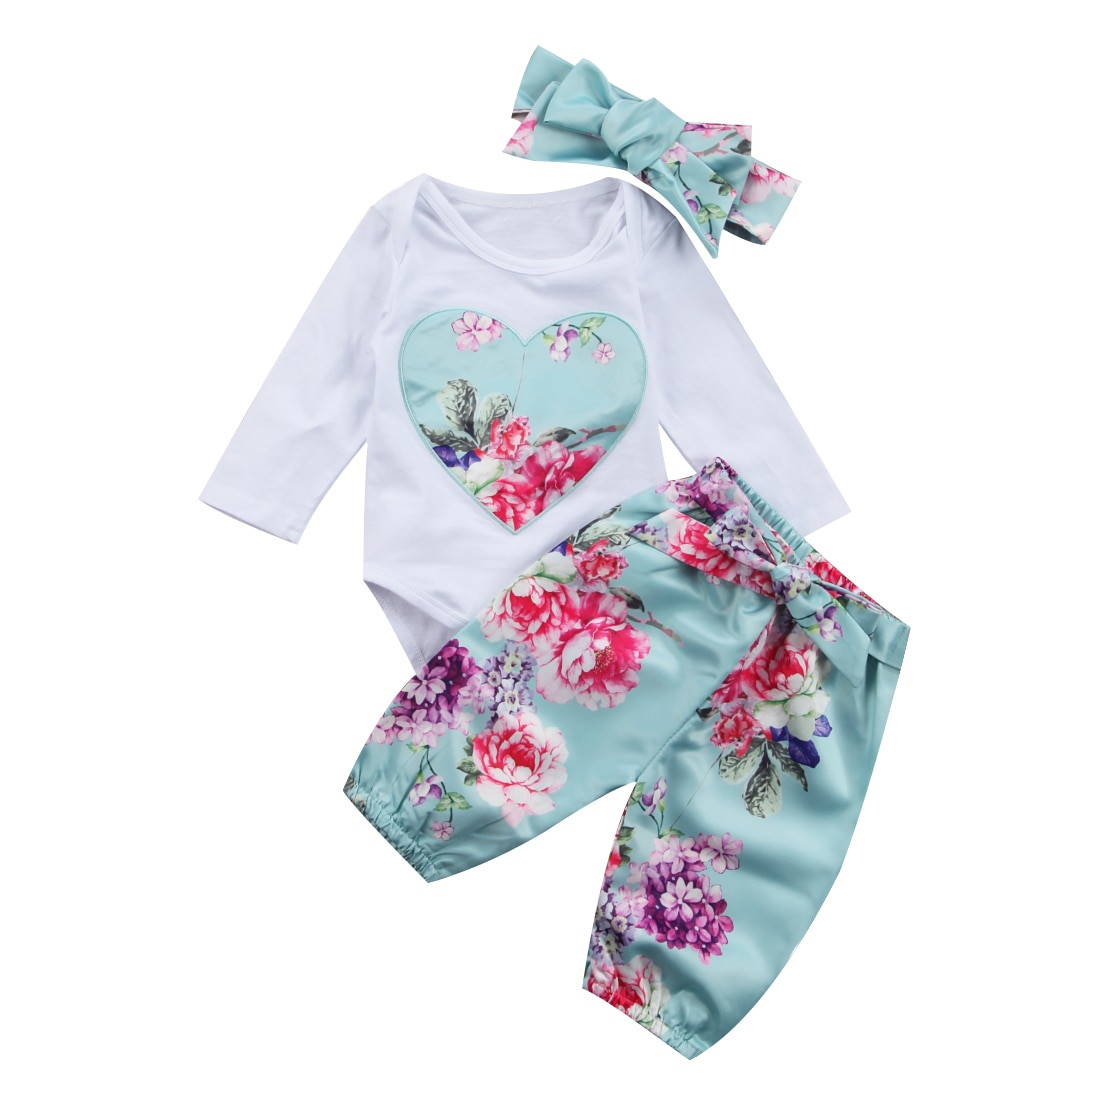 Baby Girl Fashion Clothing
 Aliexpress Buy Baby Girls Clothing Sets Autumn Love